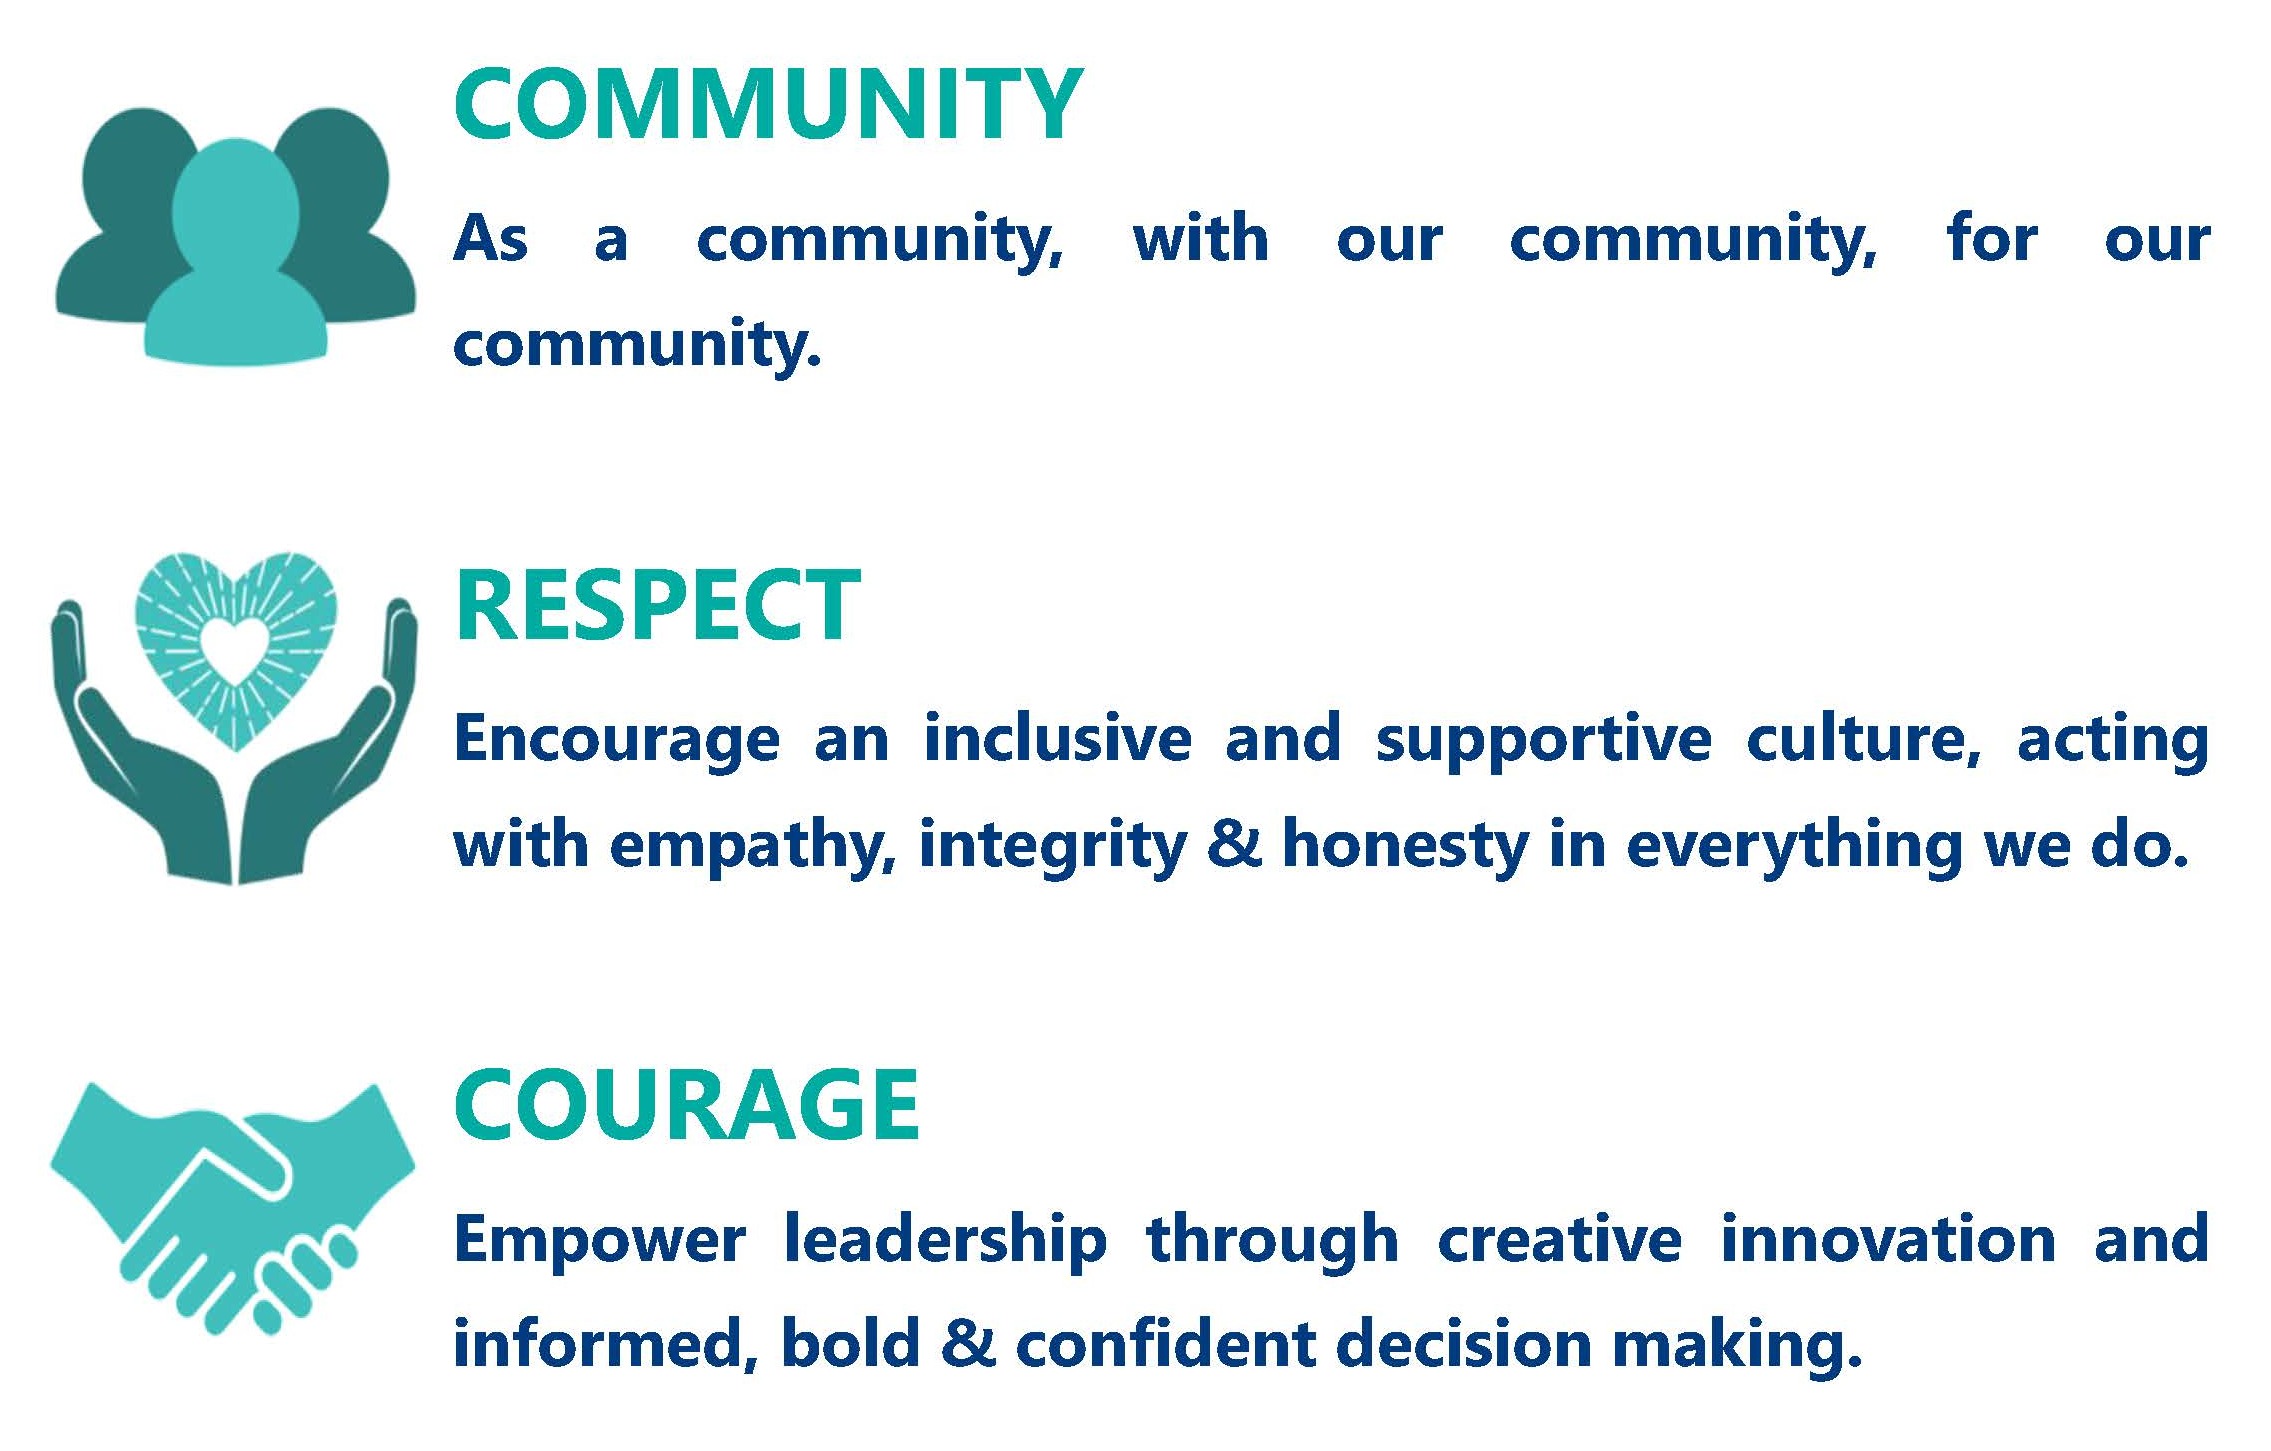 KDC organisational values image - community, respect, courage